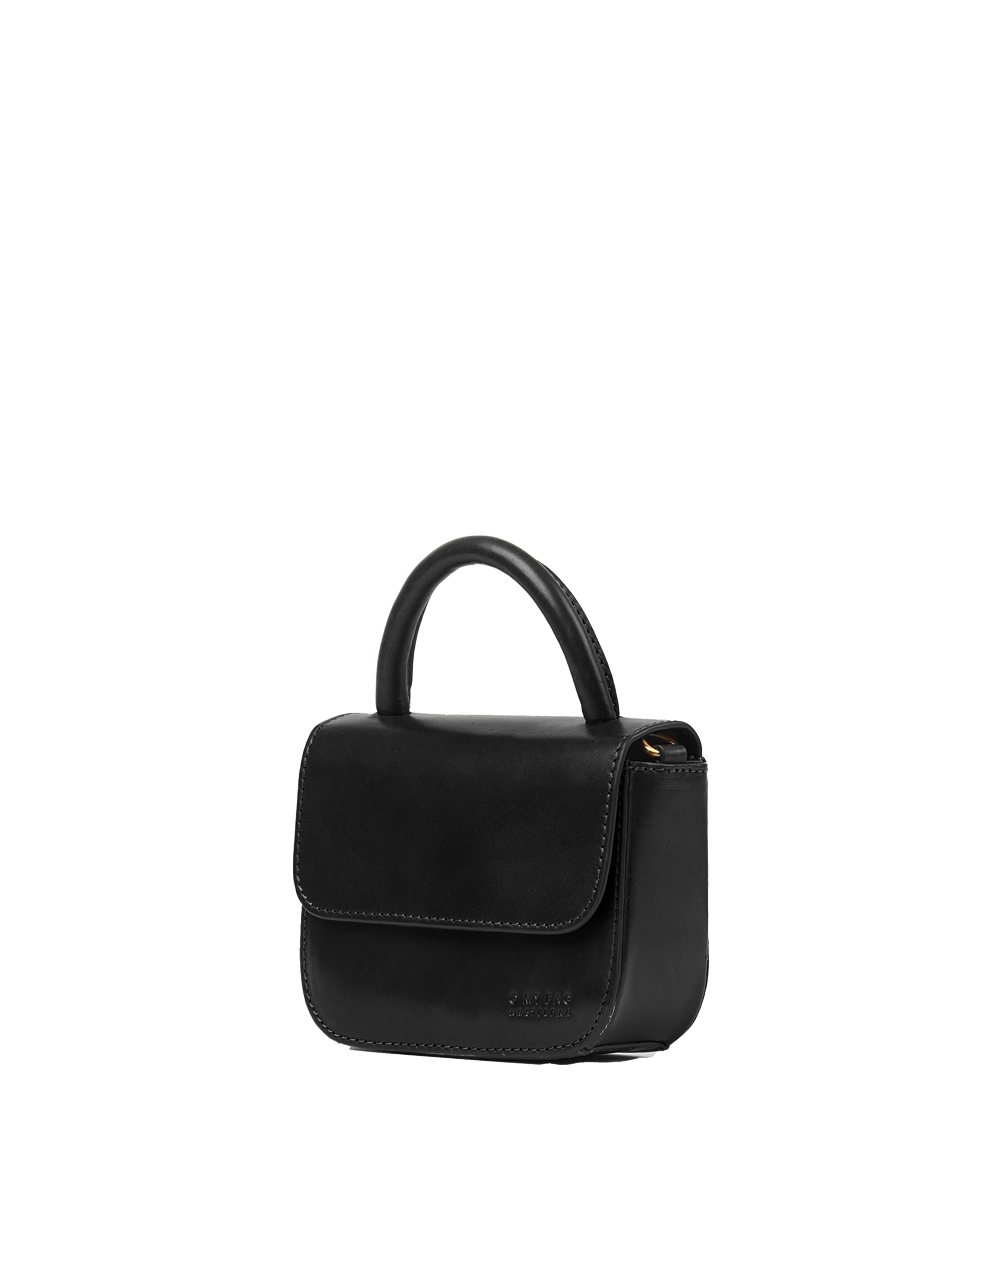 Nano Bag Black Classic Leather